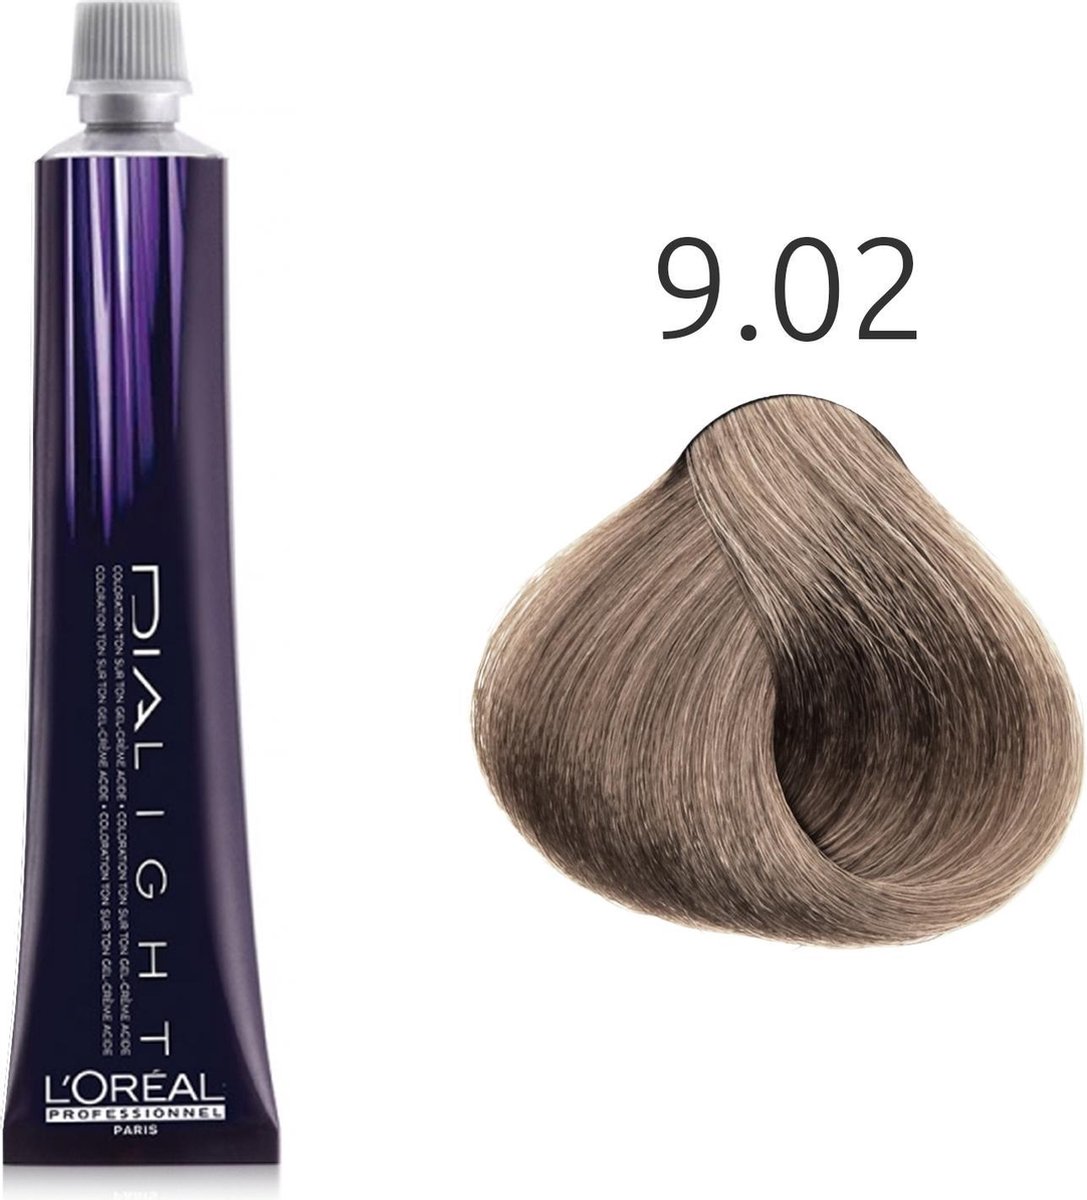 L'Oréal Paris (public) Dia Light 9.02 haarkleuring Blond 50 ml | bol.com